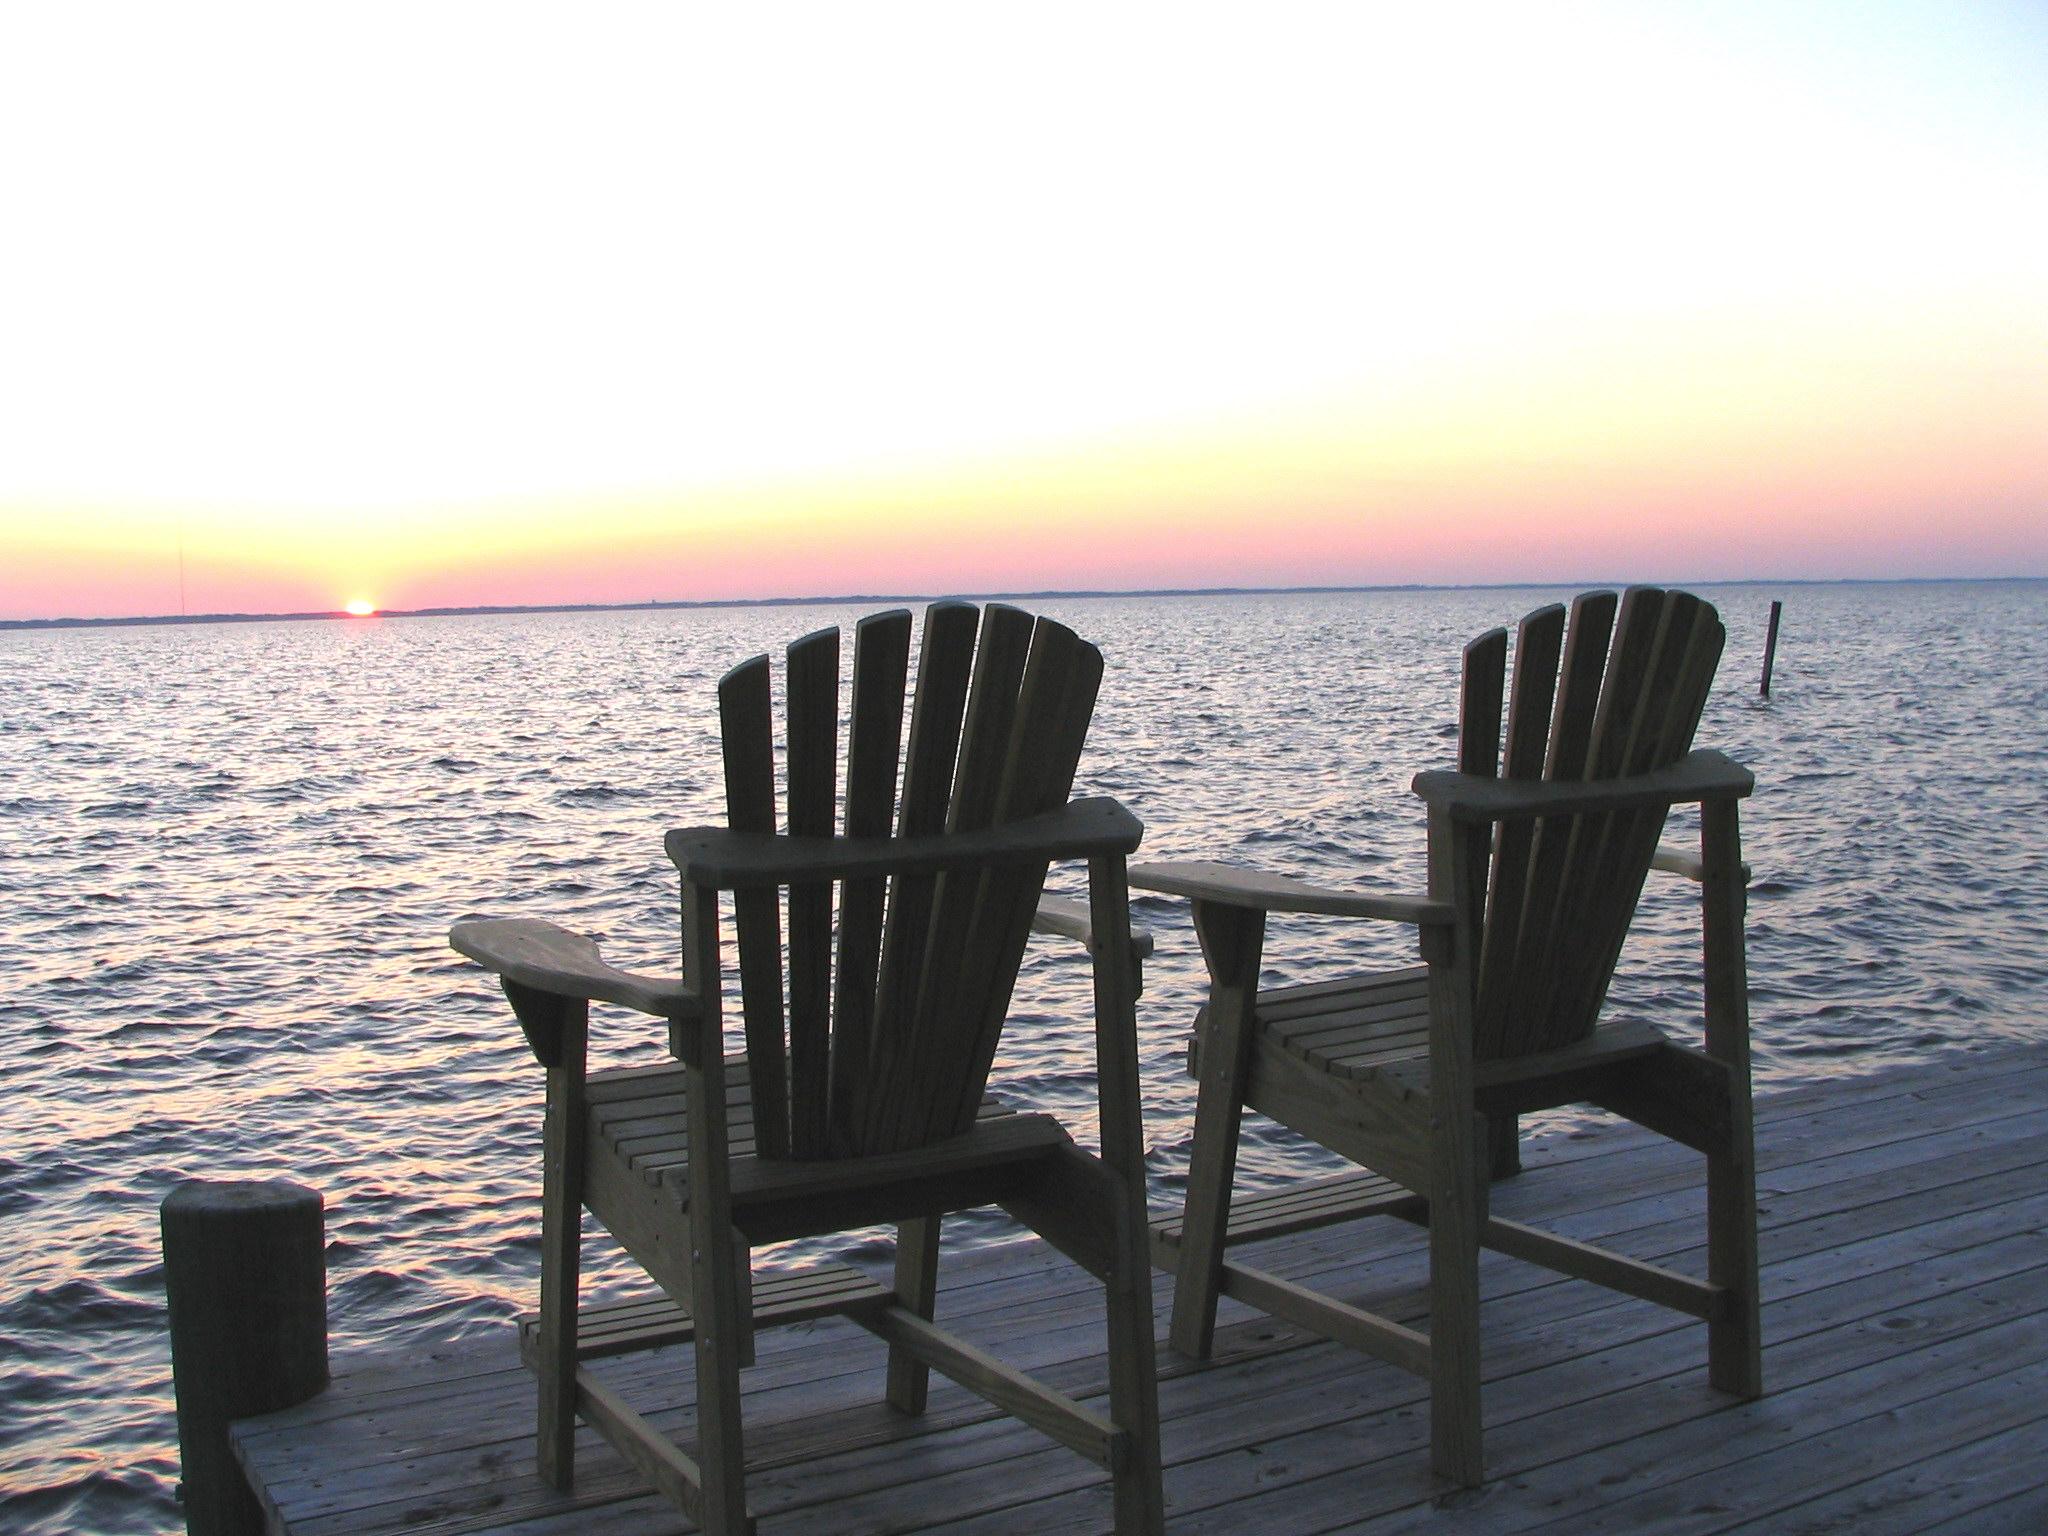 Download Adirondack Chairs On Beach Wallpaper Adirondack chairs